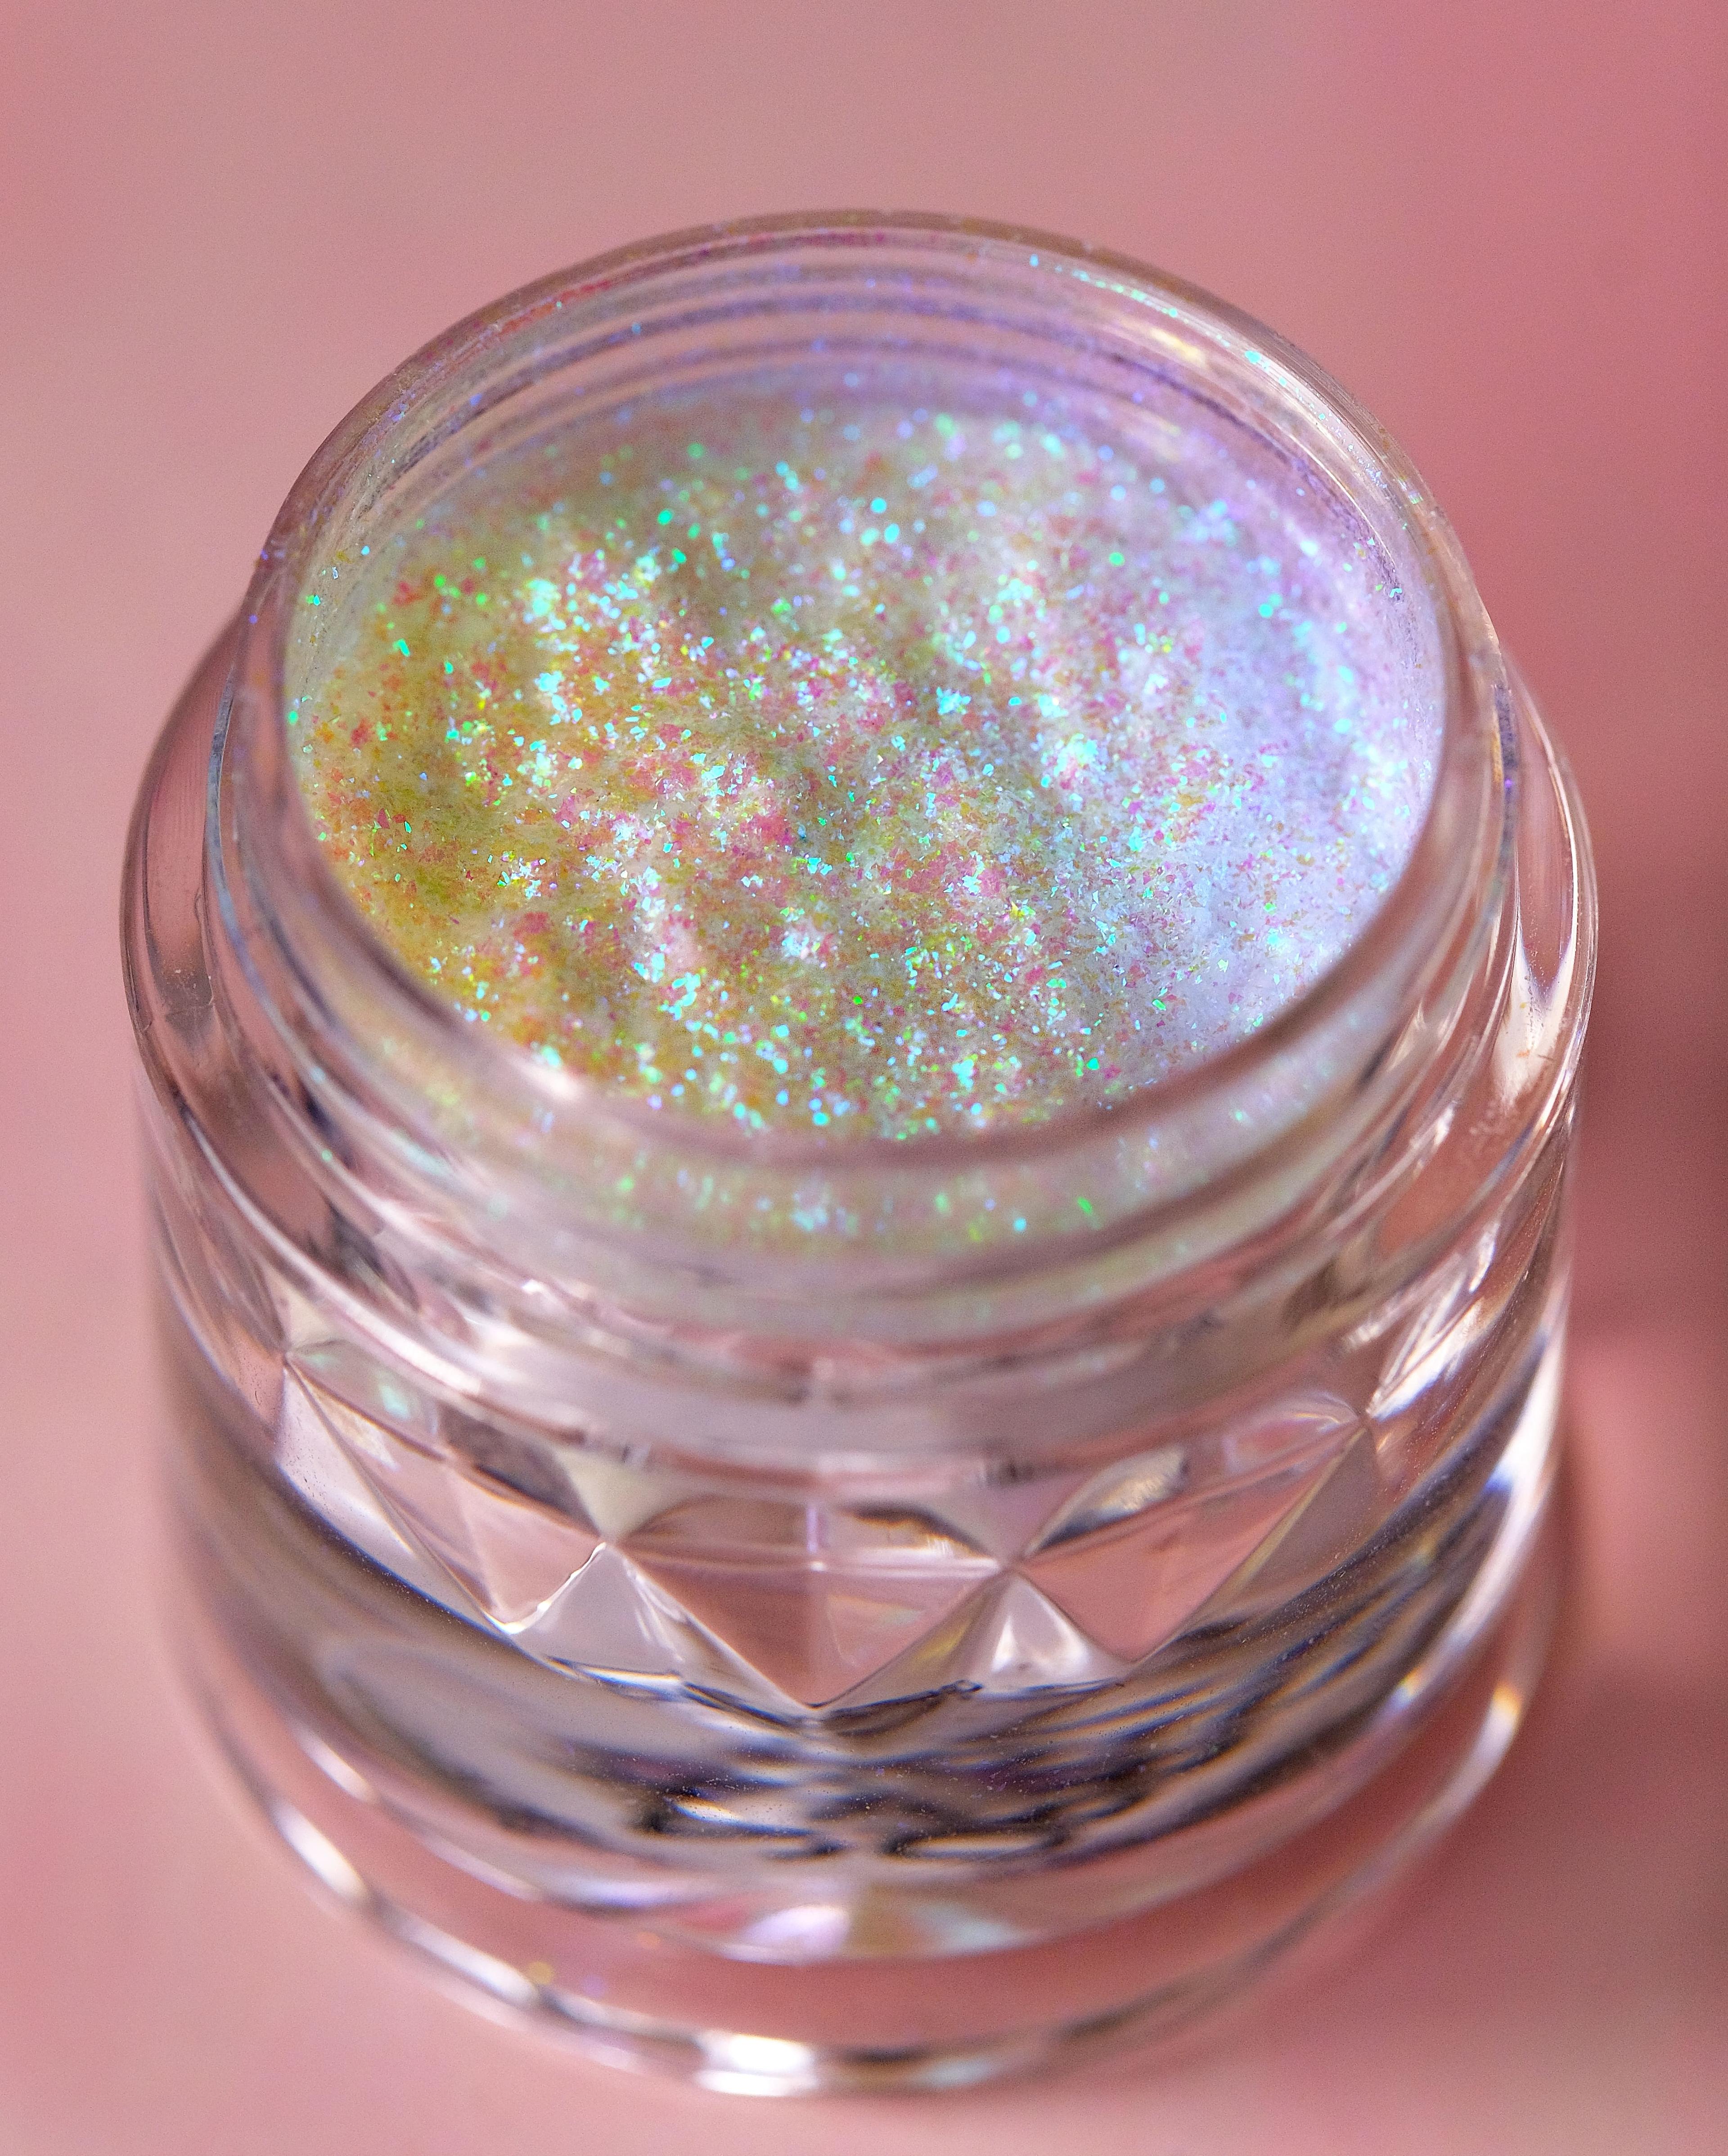 Birdsong Multichrome Loose Eyeshadow - Opal - Sparkly, by Karla Cosmetics | Karla Cosmetics